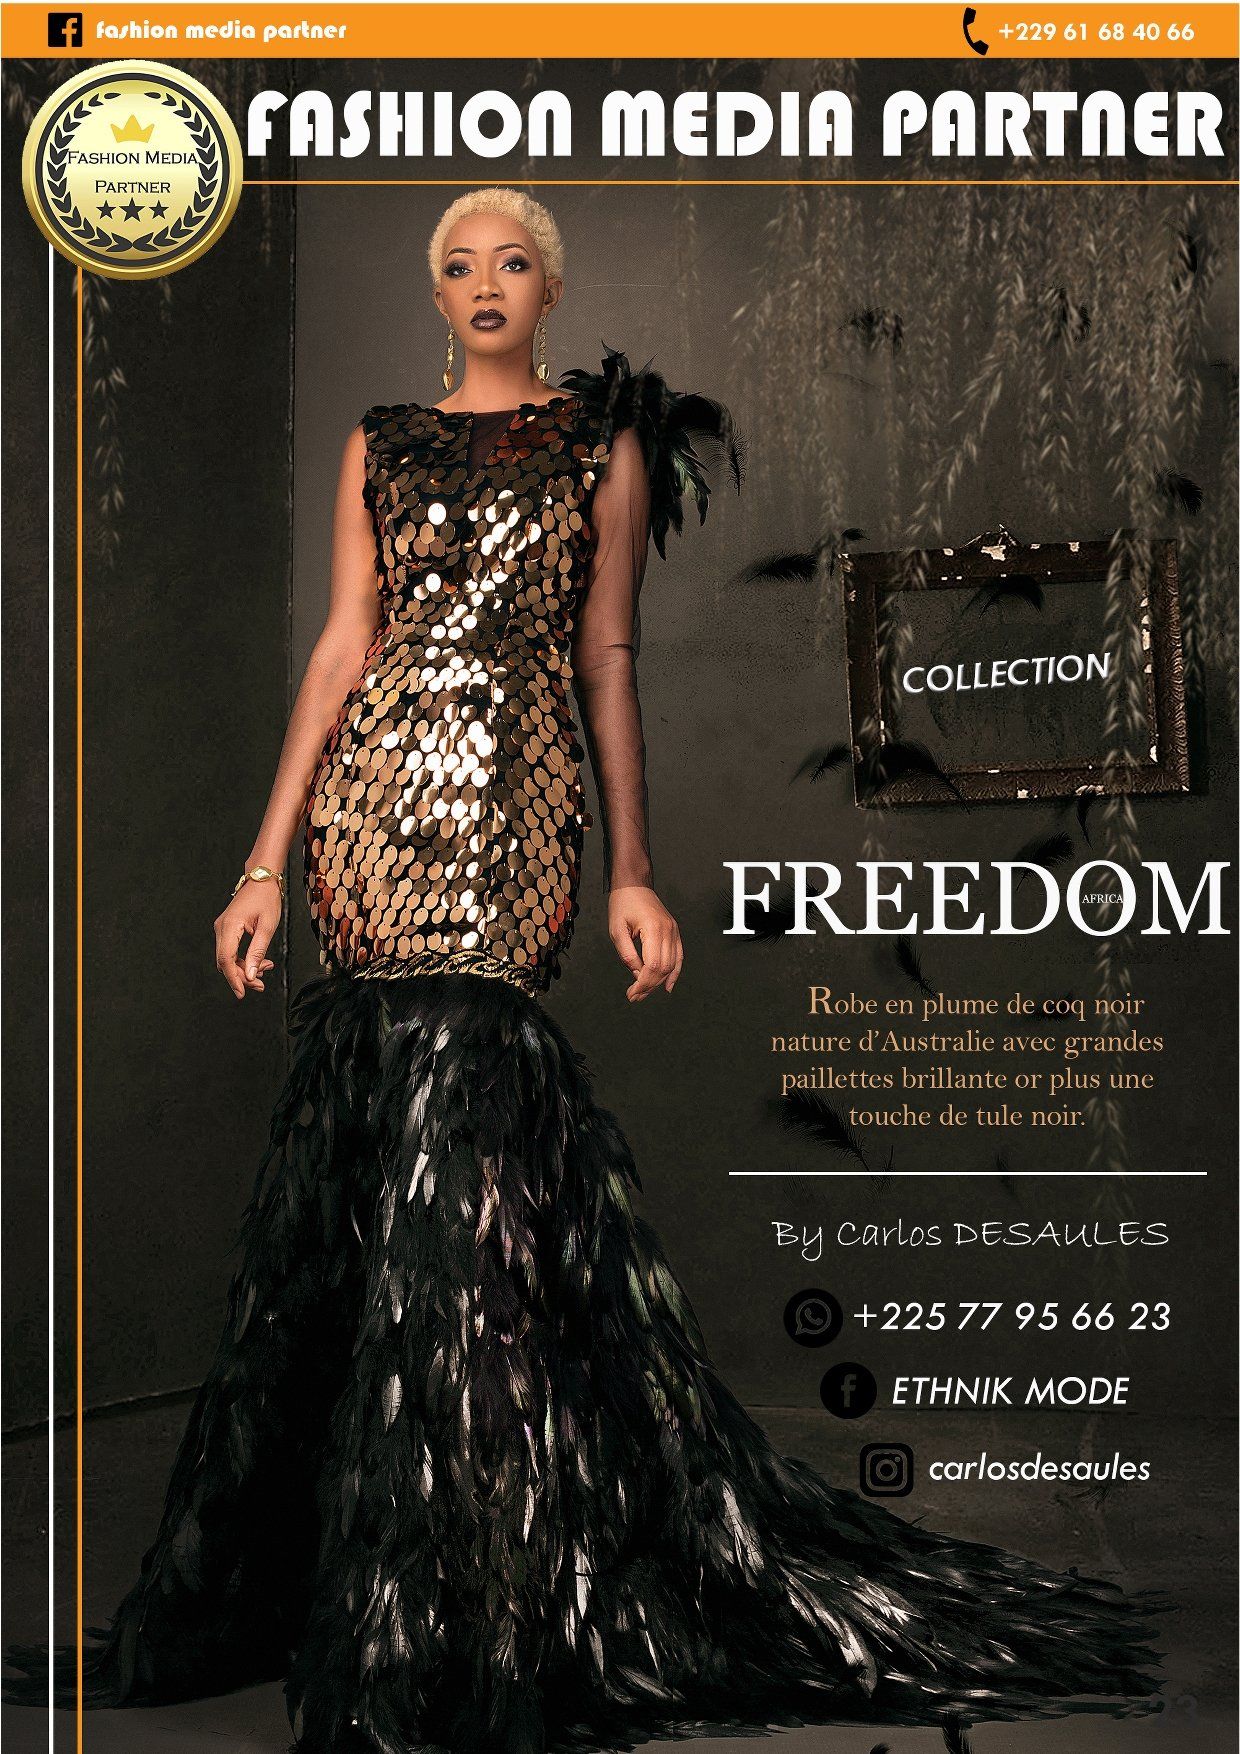 Ethnik Mode freedom Côte Ivoire Carlos Desaules